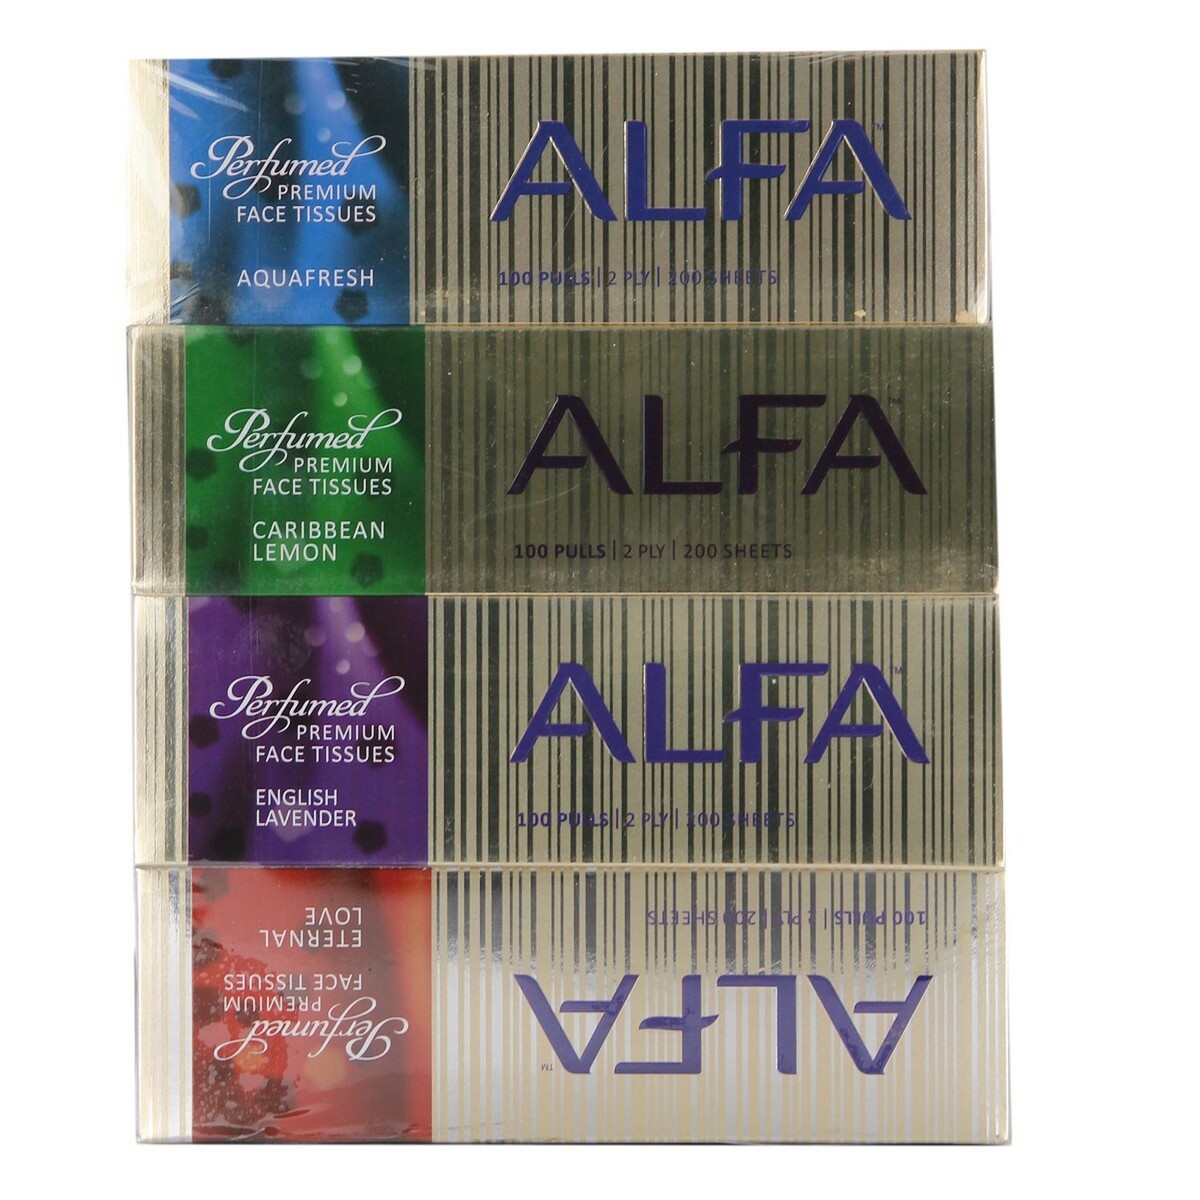 Alfa Tissue 100pcs x 4pkt  Assorted Boxes